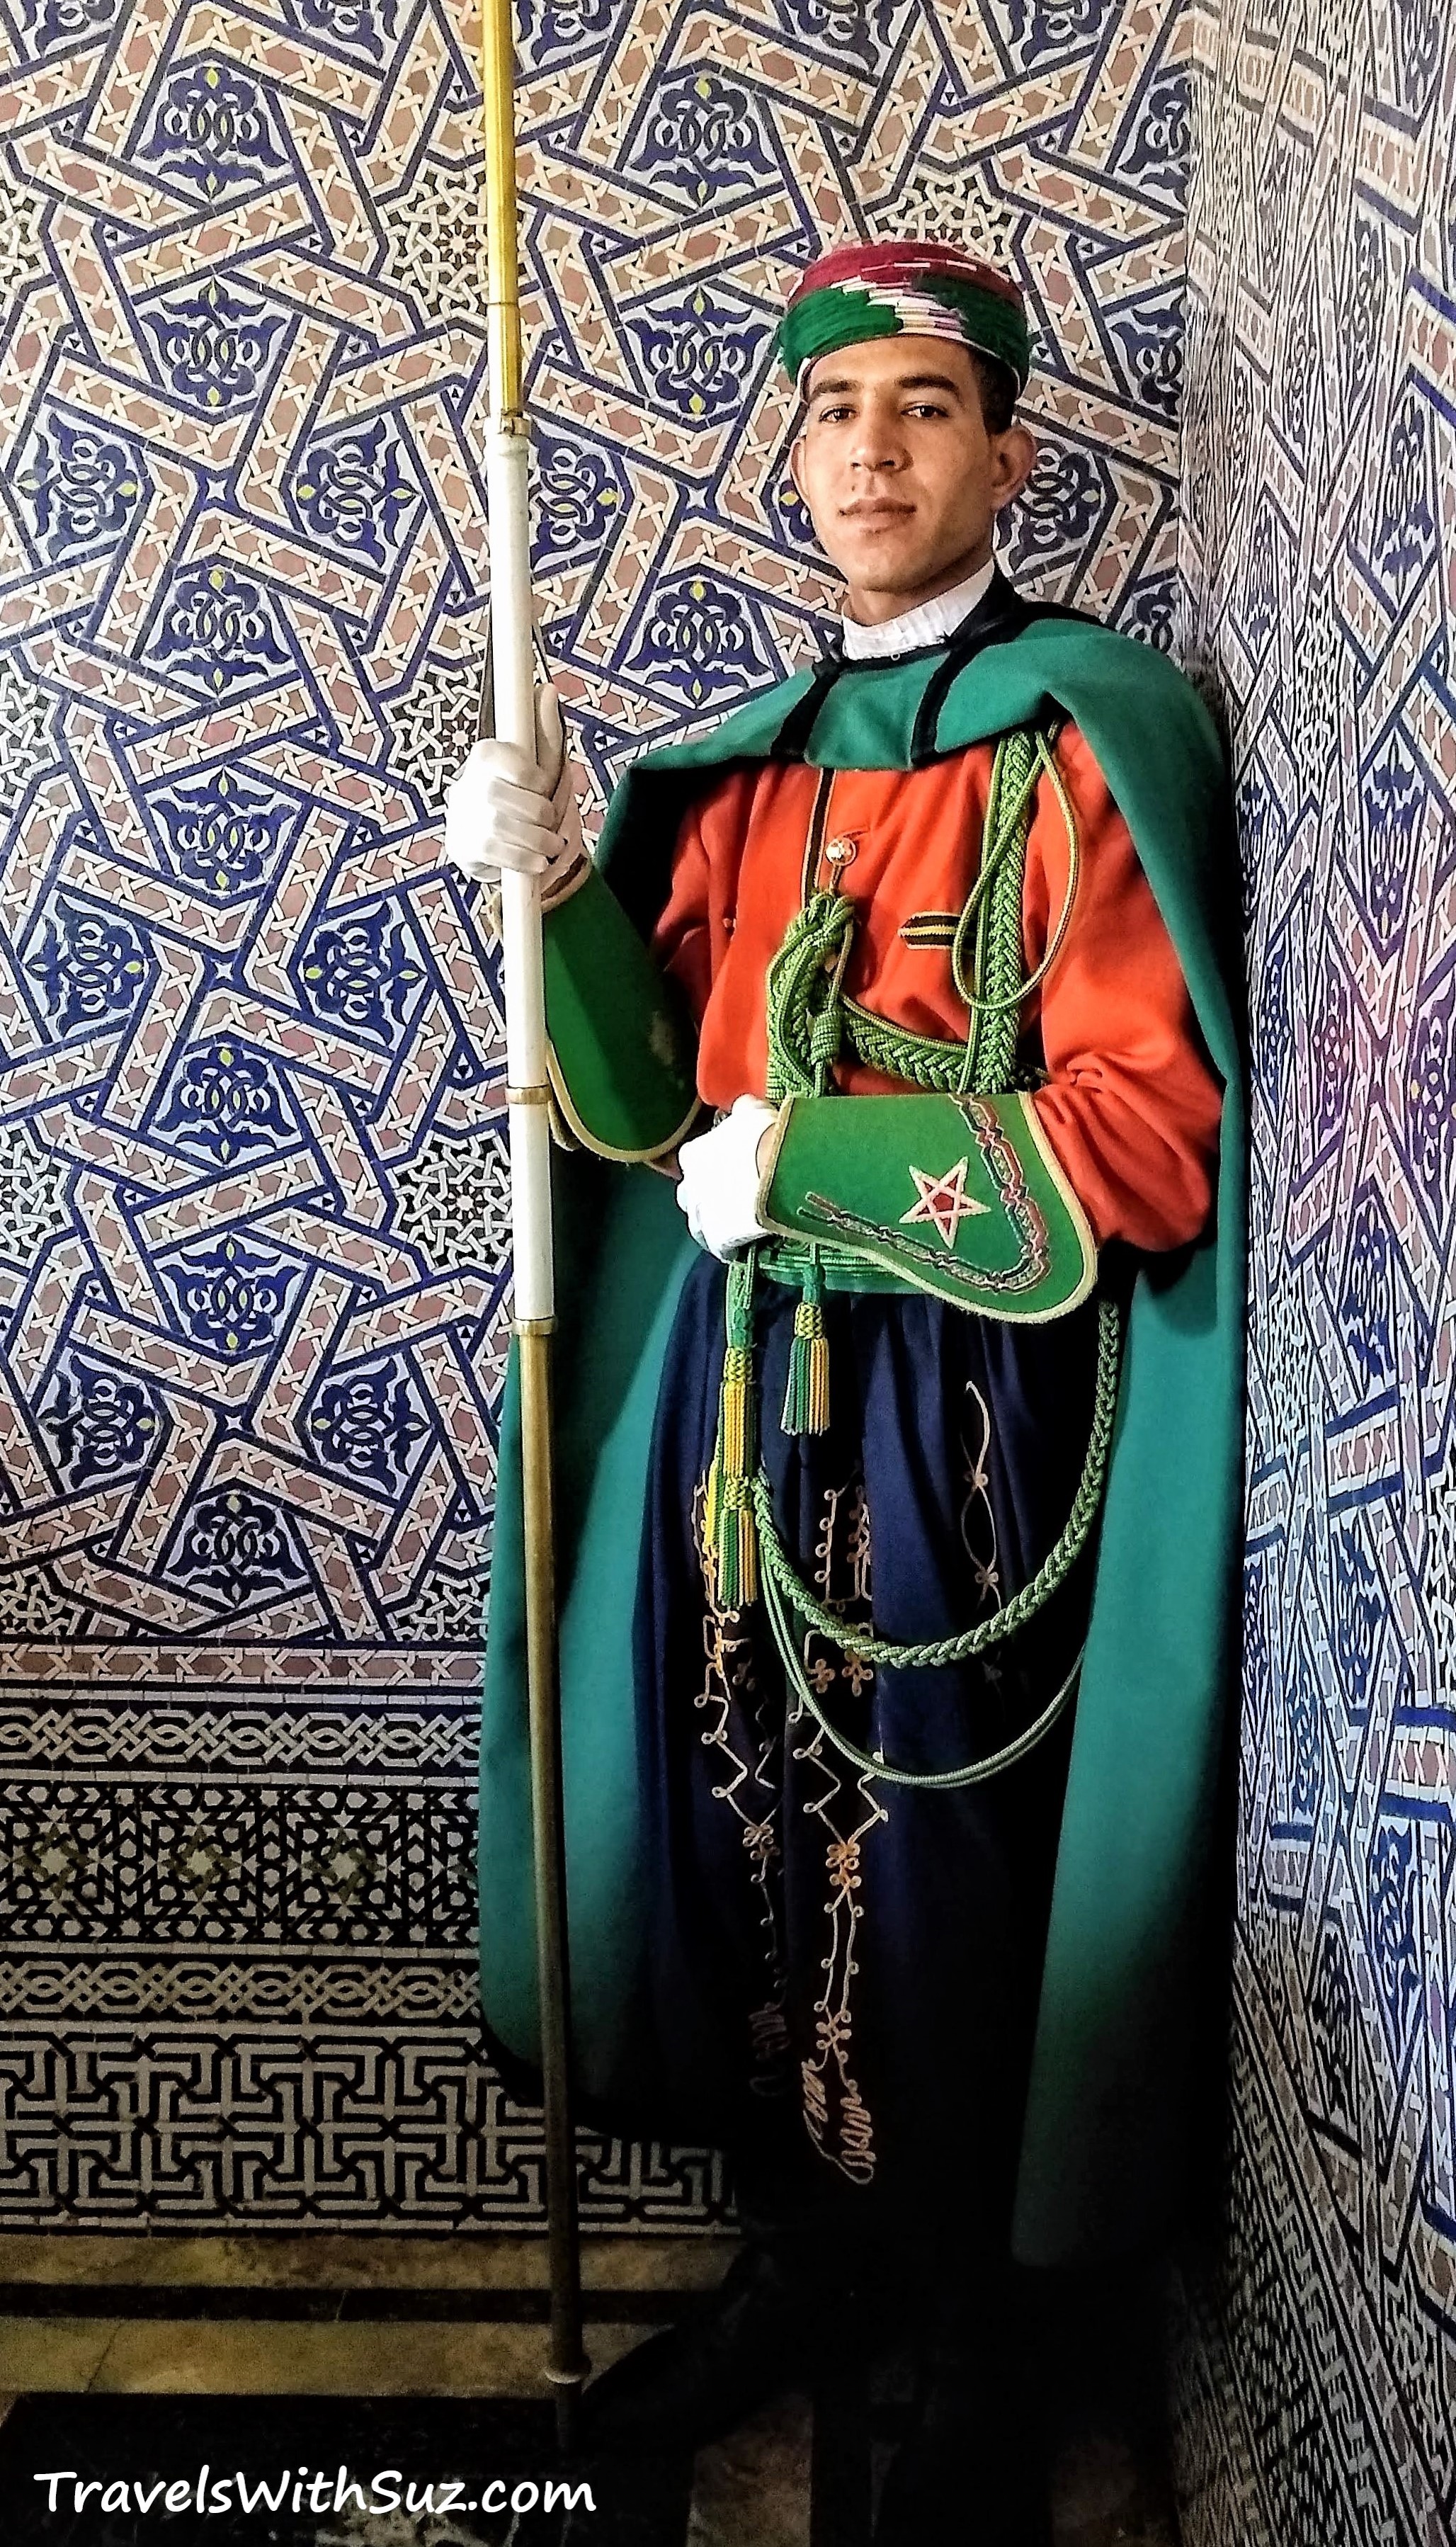 Rabat, Morocco - mausoleum guard with colorful costume